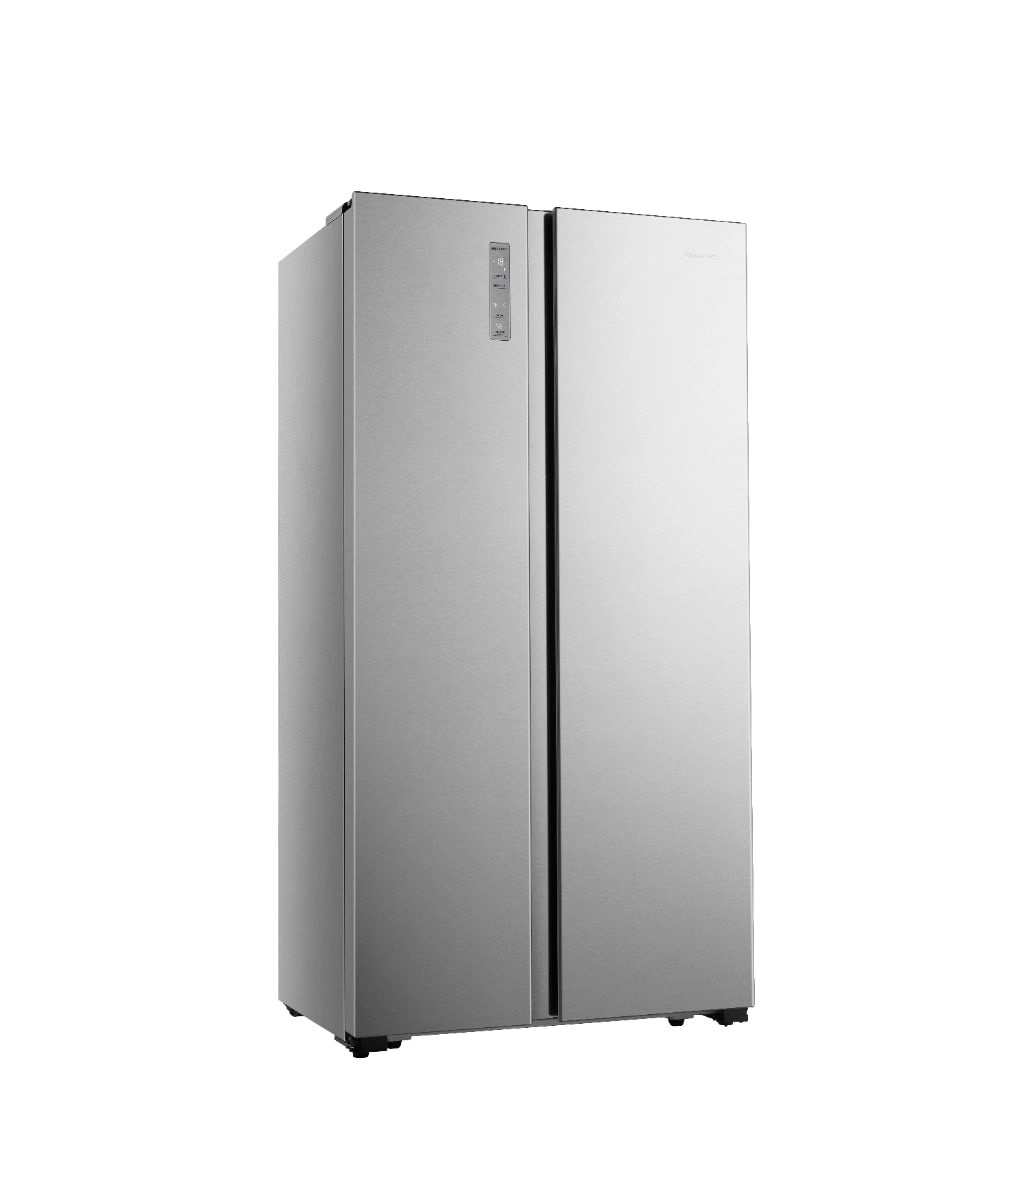 Hisense 670L side by side Refrigerator